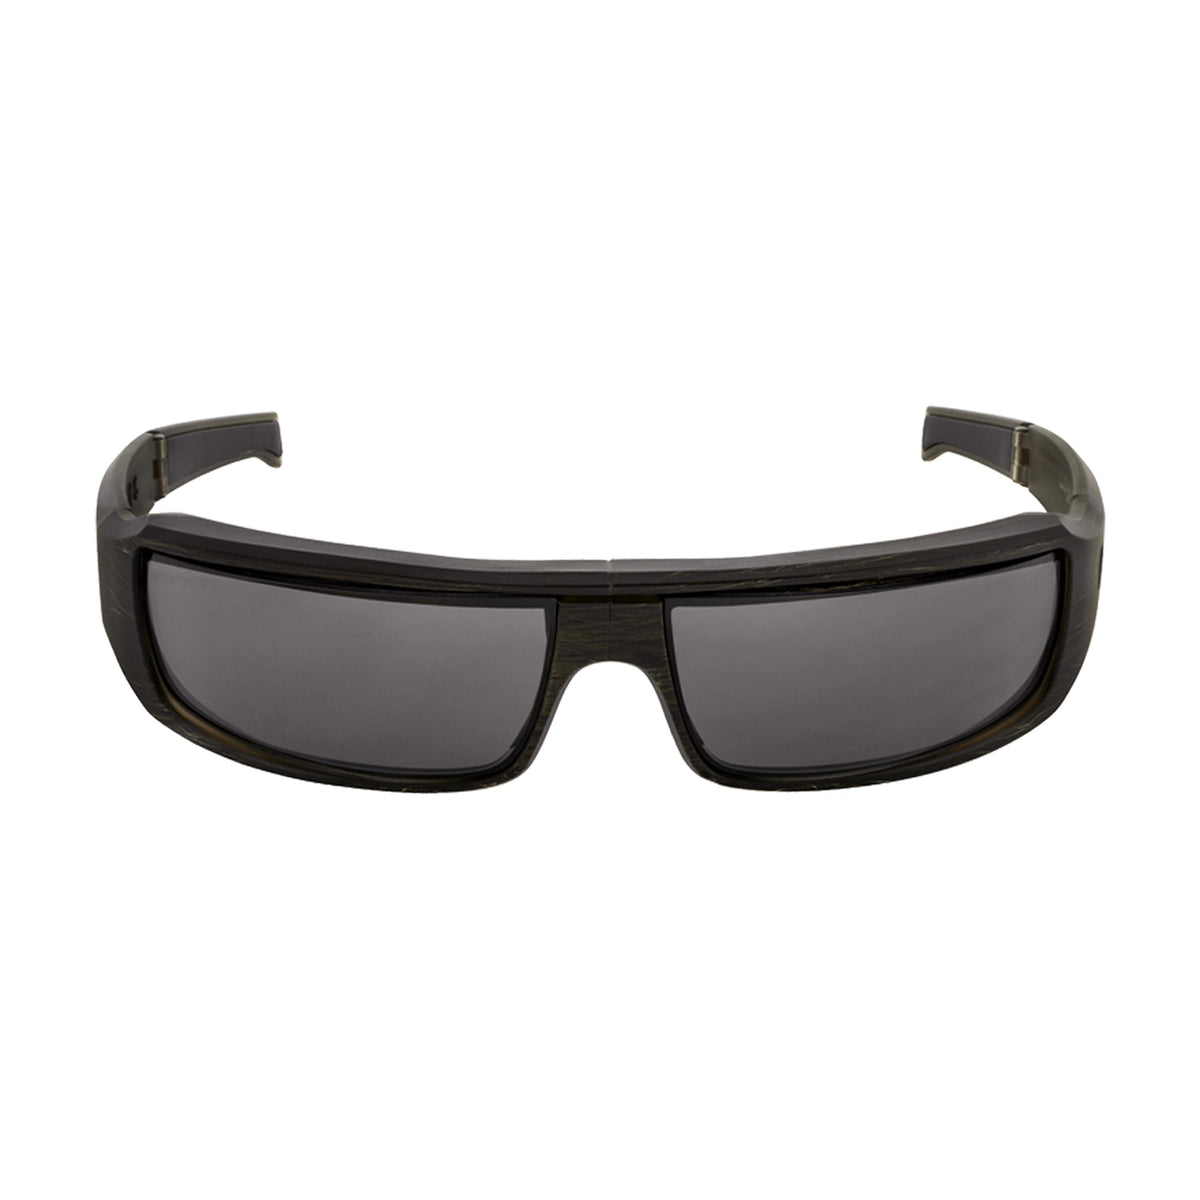 Popticals, Premium Compact Sunglasses, PopSign, 090020-ZUGP, Polarized Sunglasses, Matte Brush Black Frame, Gray Lenses, Front View